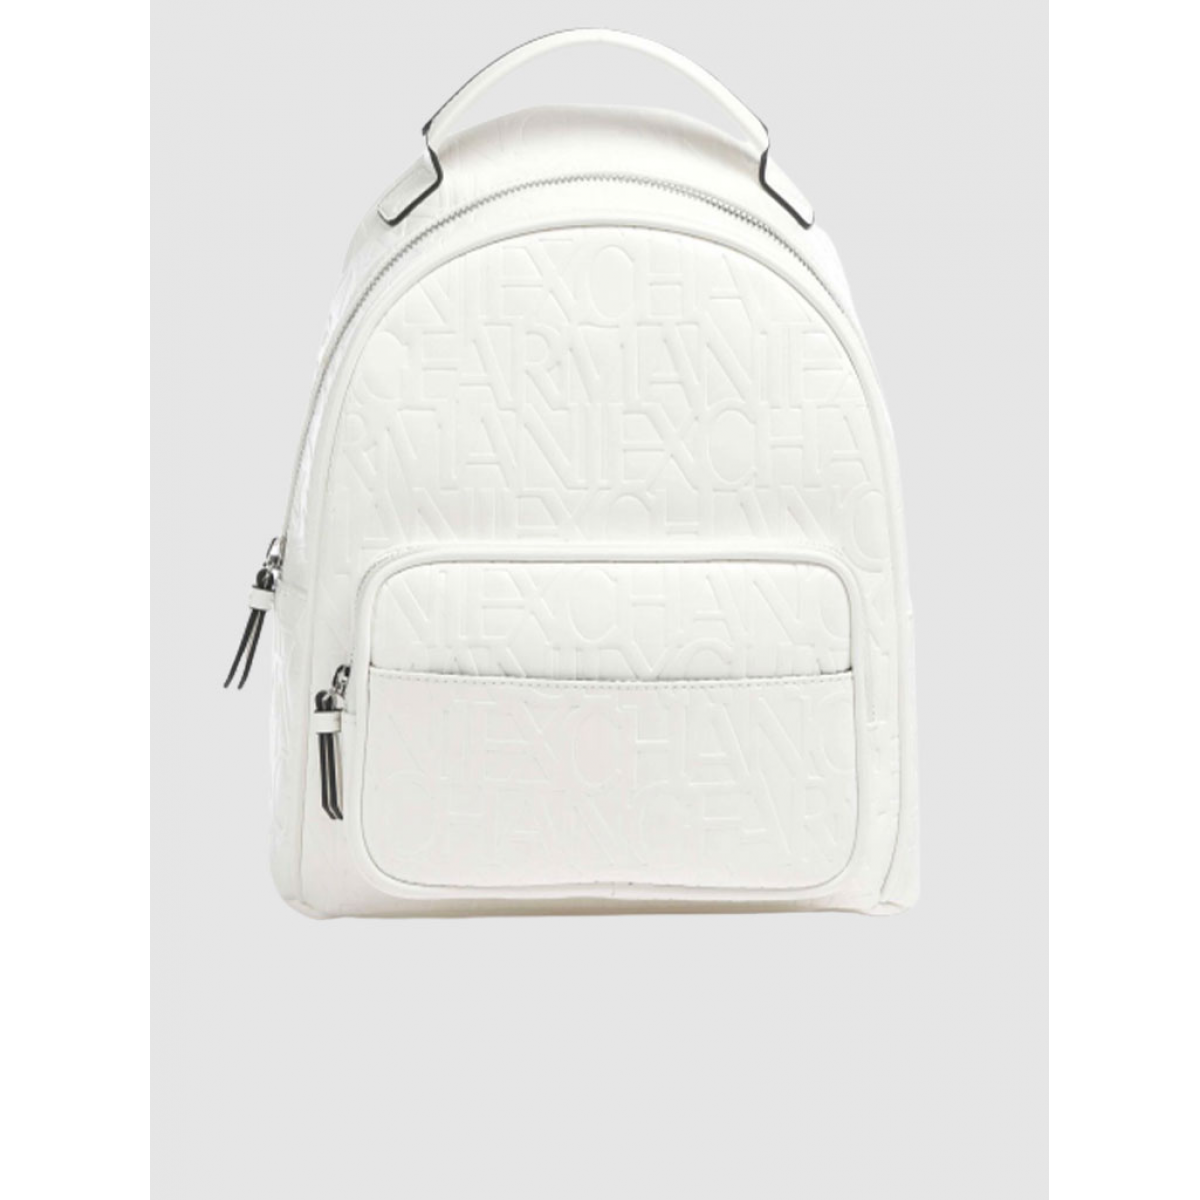 Backpack Woman White Armani Exchange - 942805Cc793 - 942805CC793.1 ...